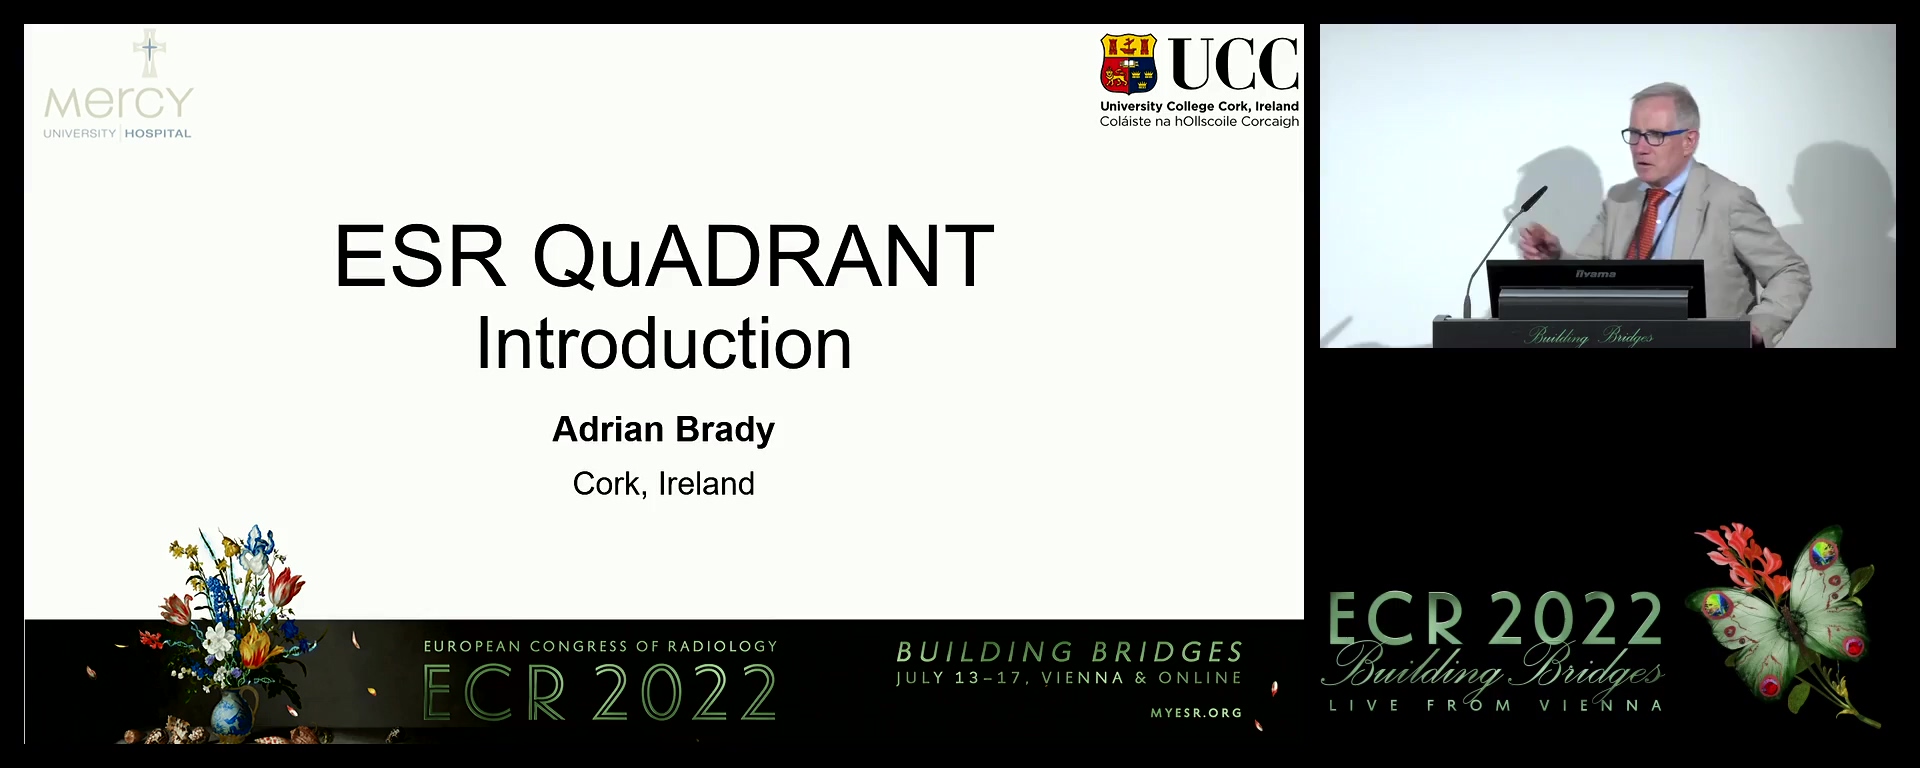 Chairperson's introduction - Adrian Brady, Cork / IE